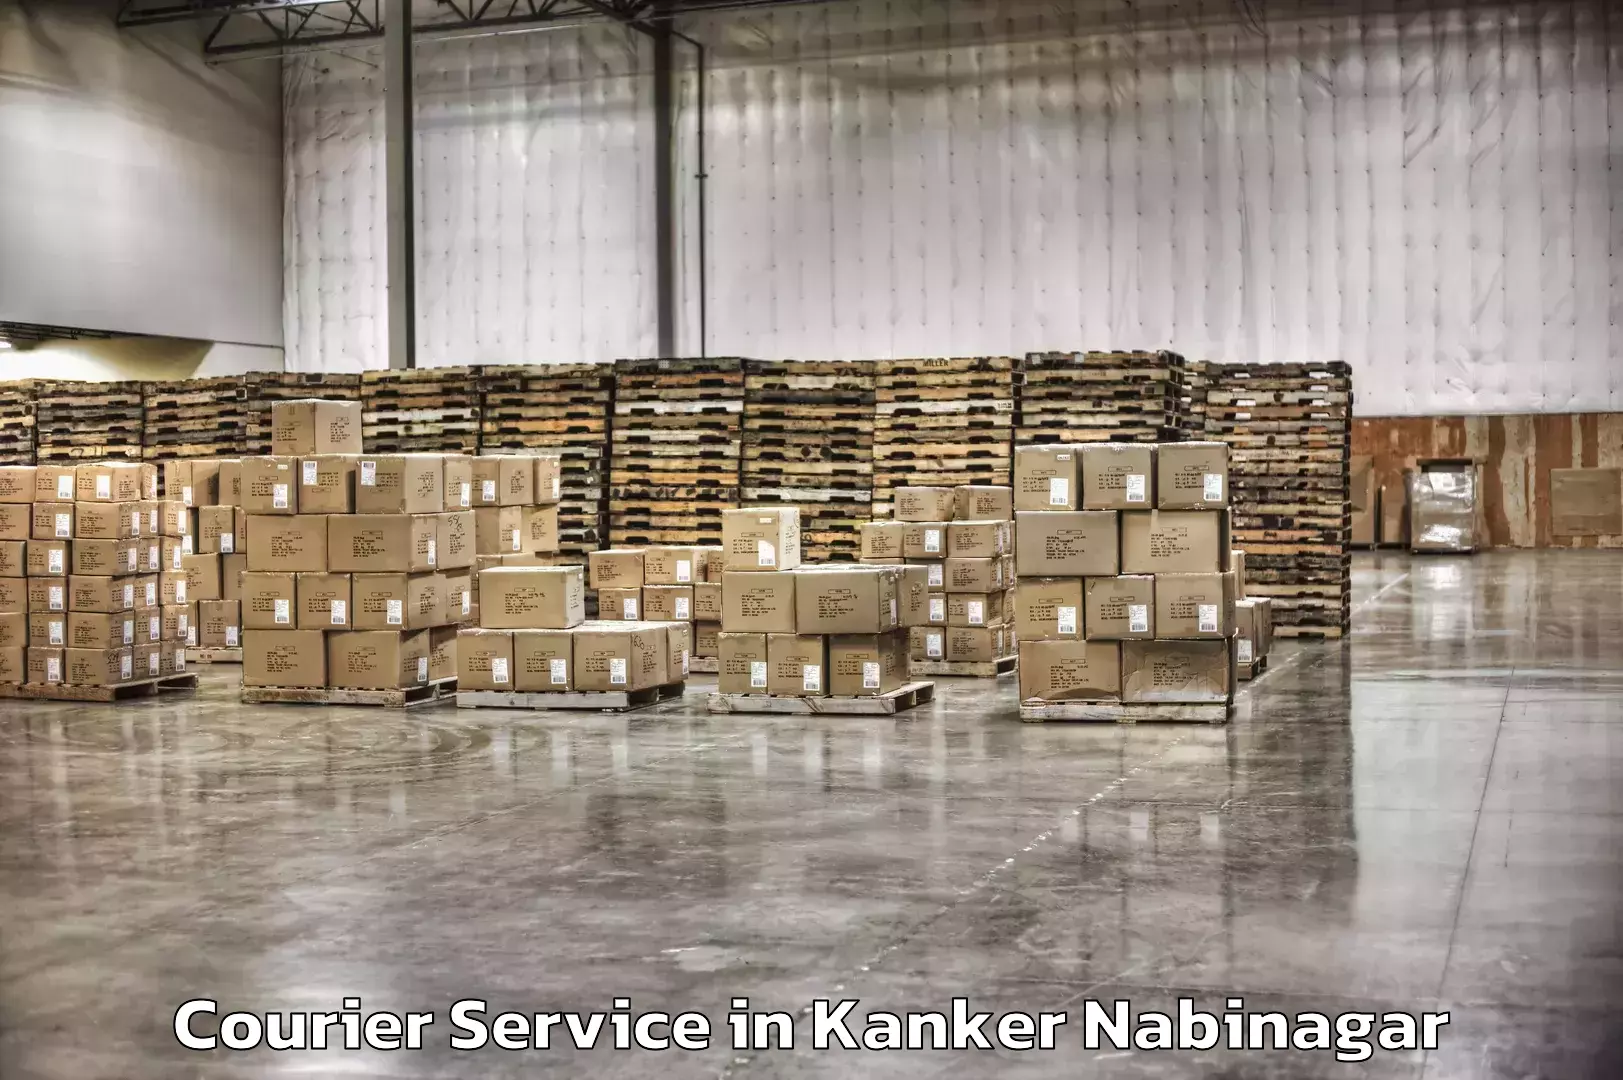 Affordable international shipping in Kanker Nabinagar